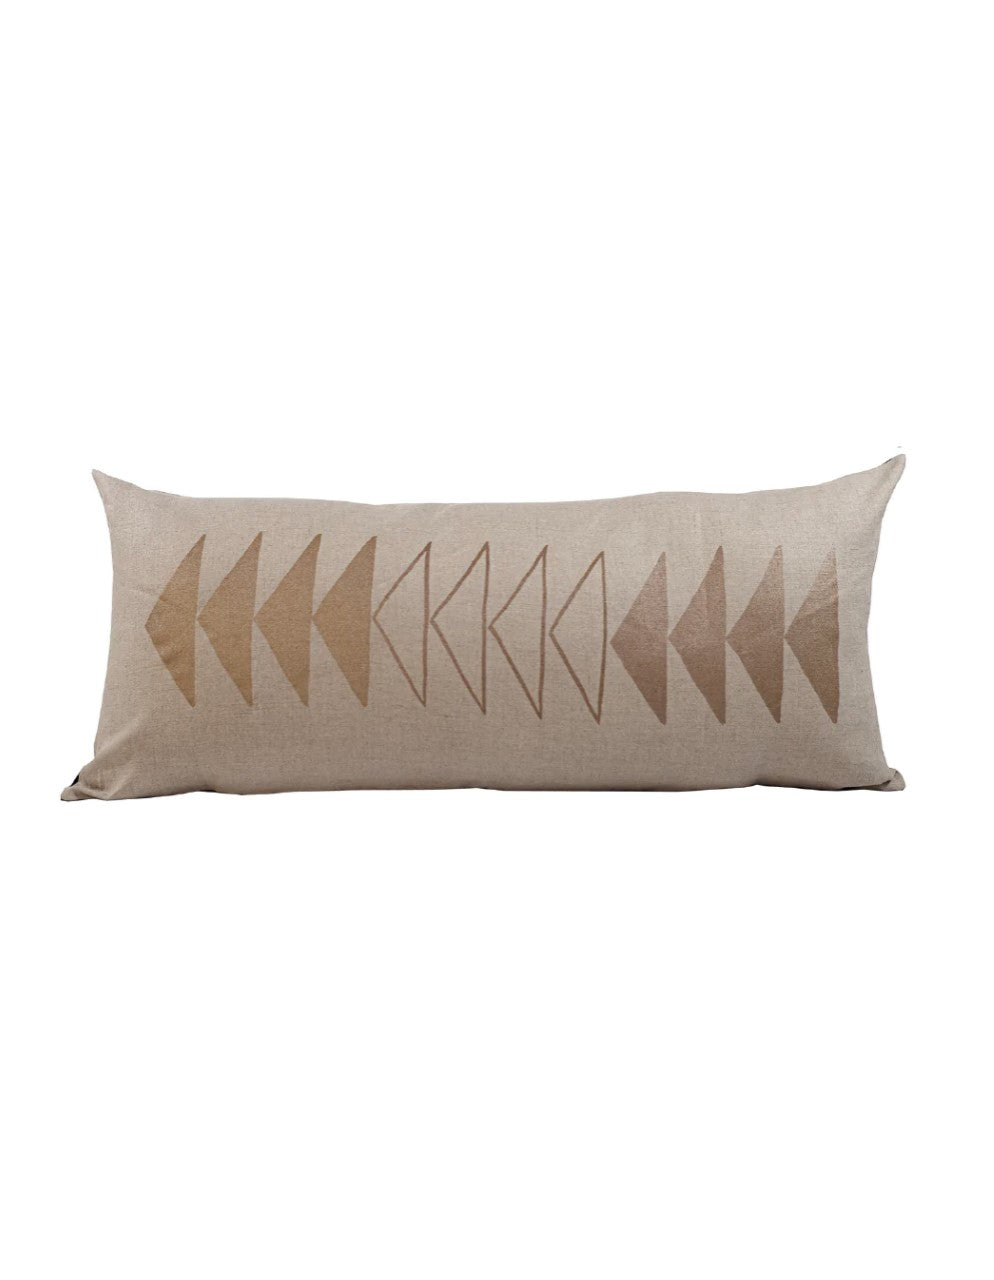 Copper Arrows Long Lumbar Pillow